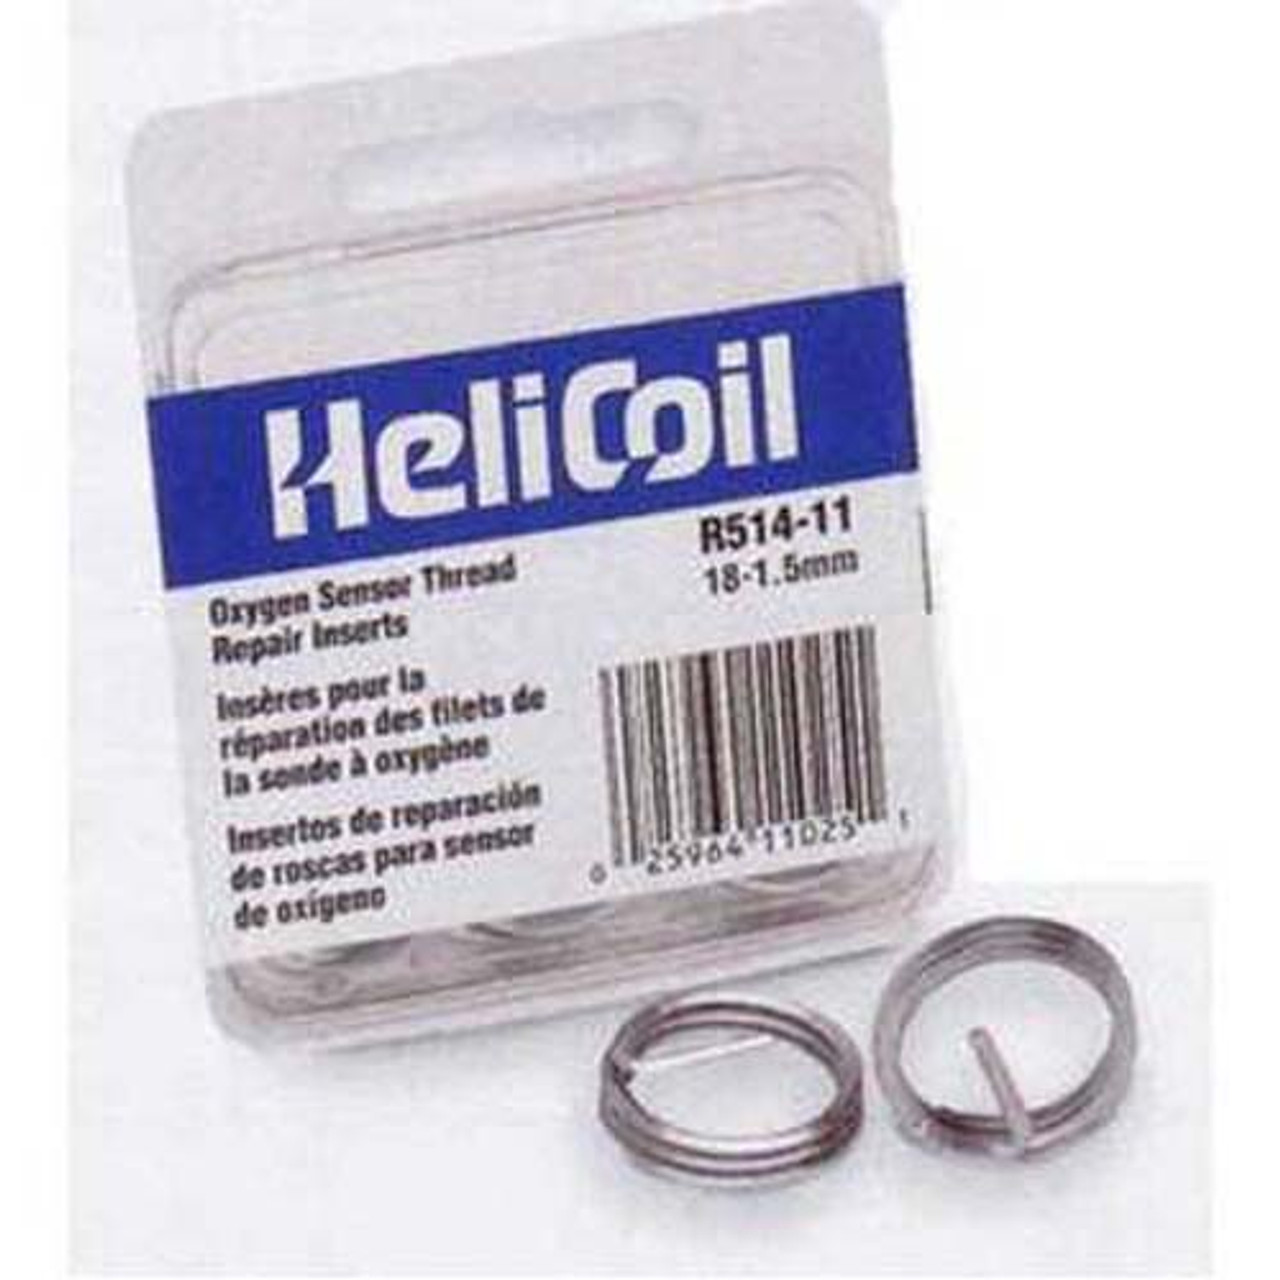 Helicoil r514-11 酸素センサーネジ山修理 JB Tools